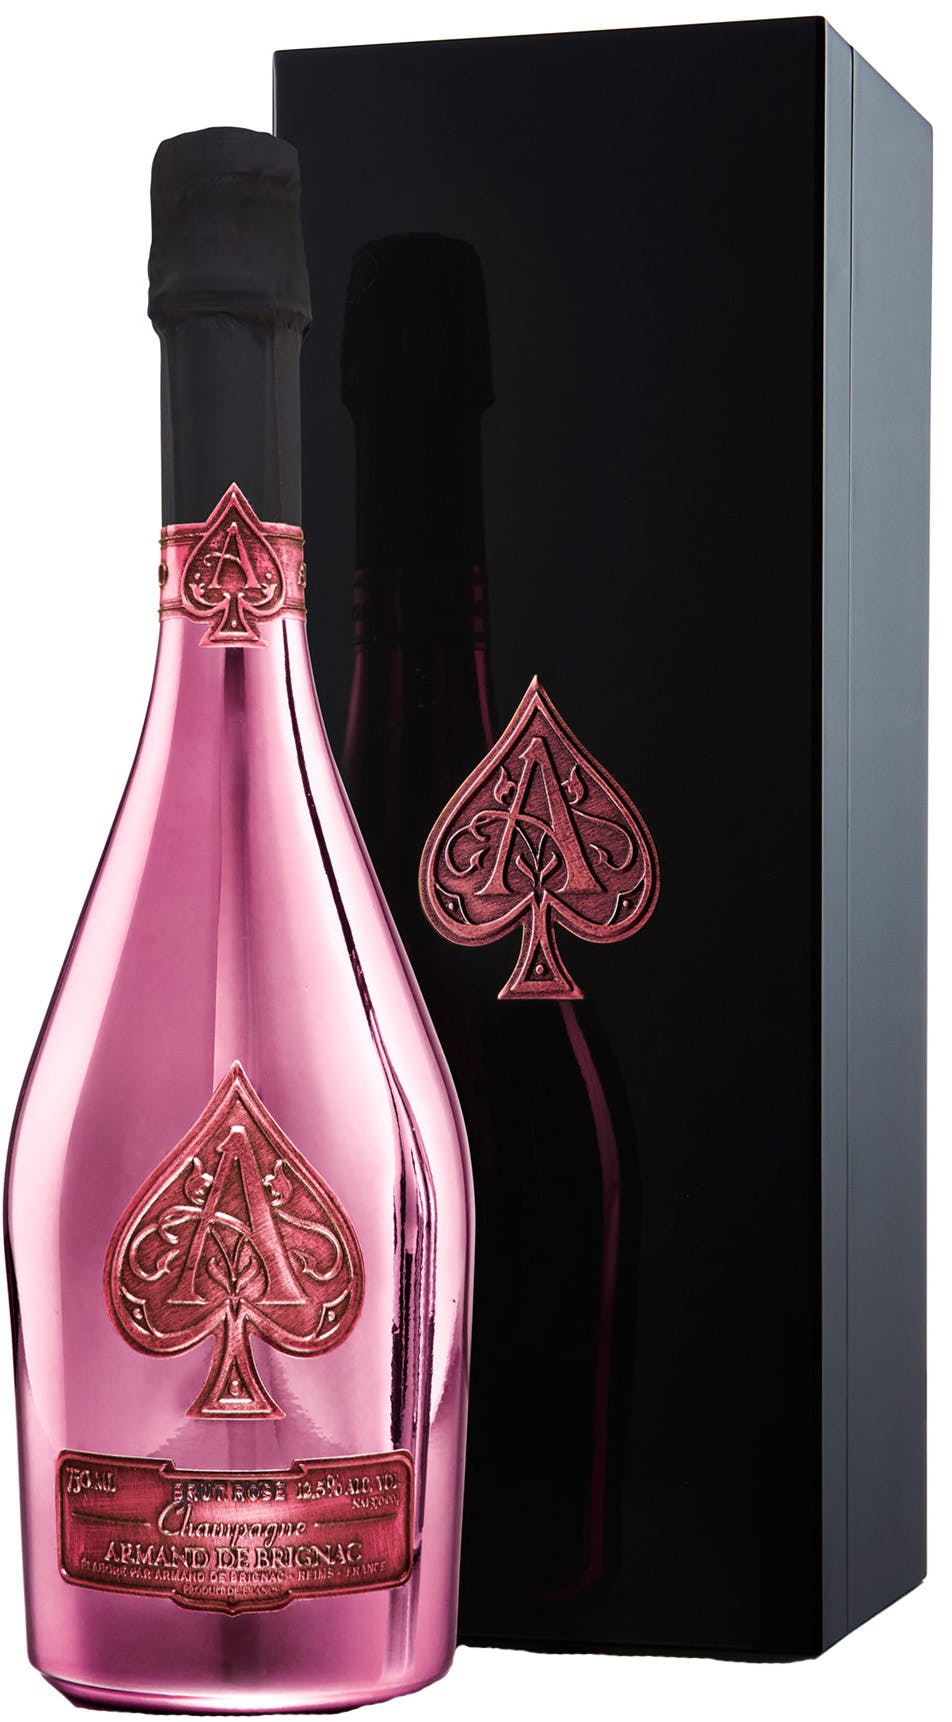 Ace of Spade Rose (Armand de Brignac) - 75cl - My Liquor Hub Website